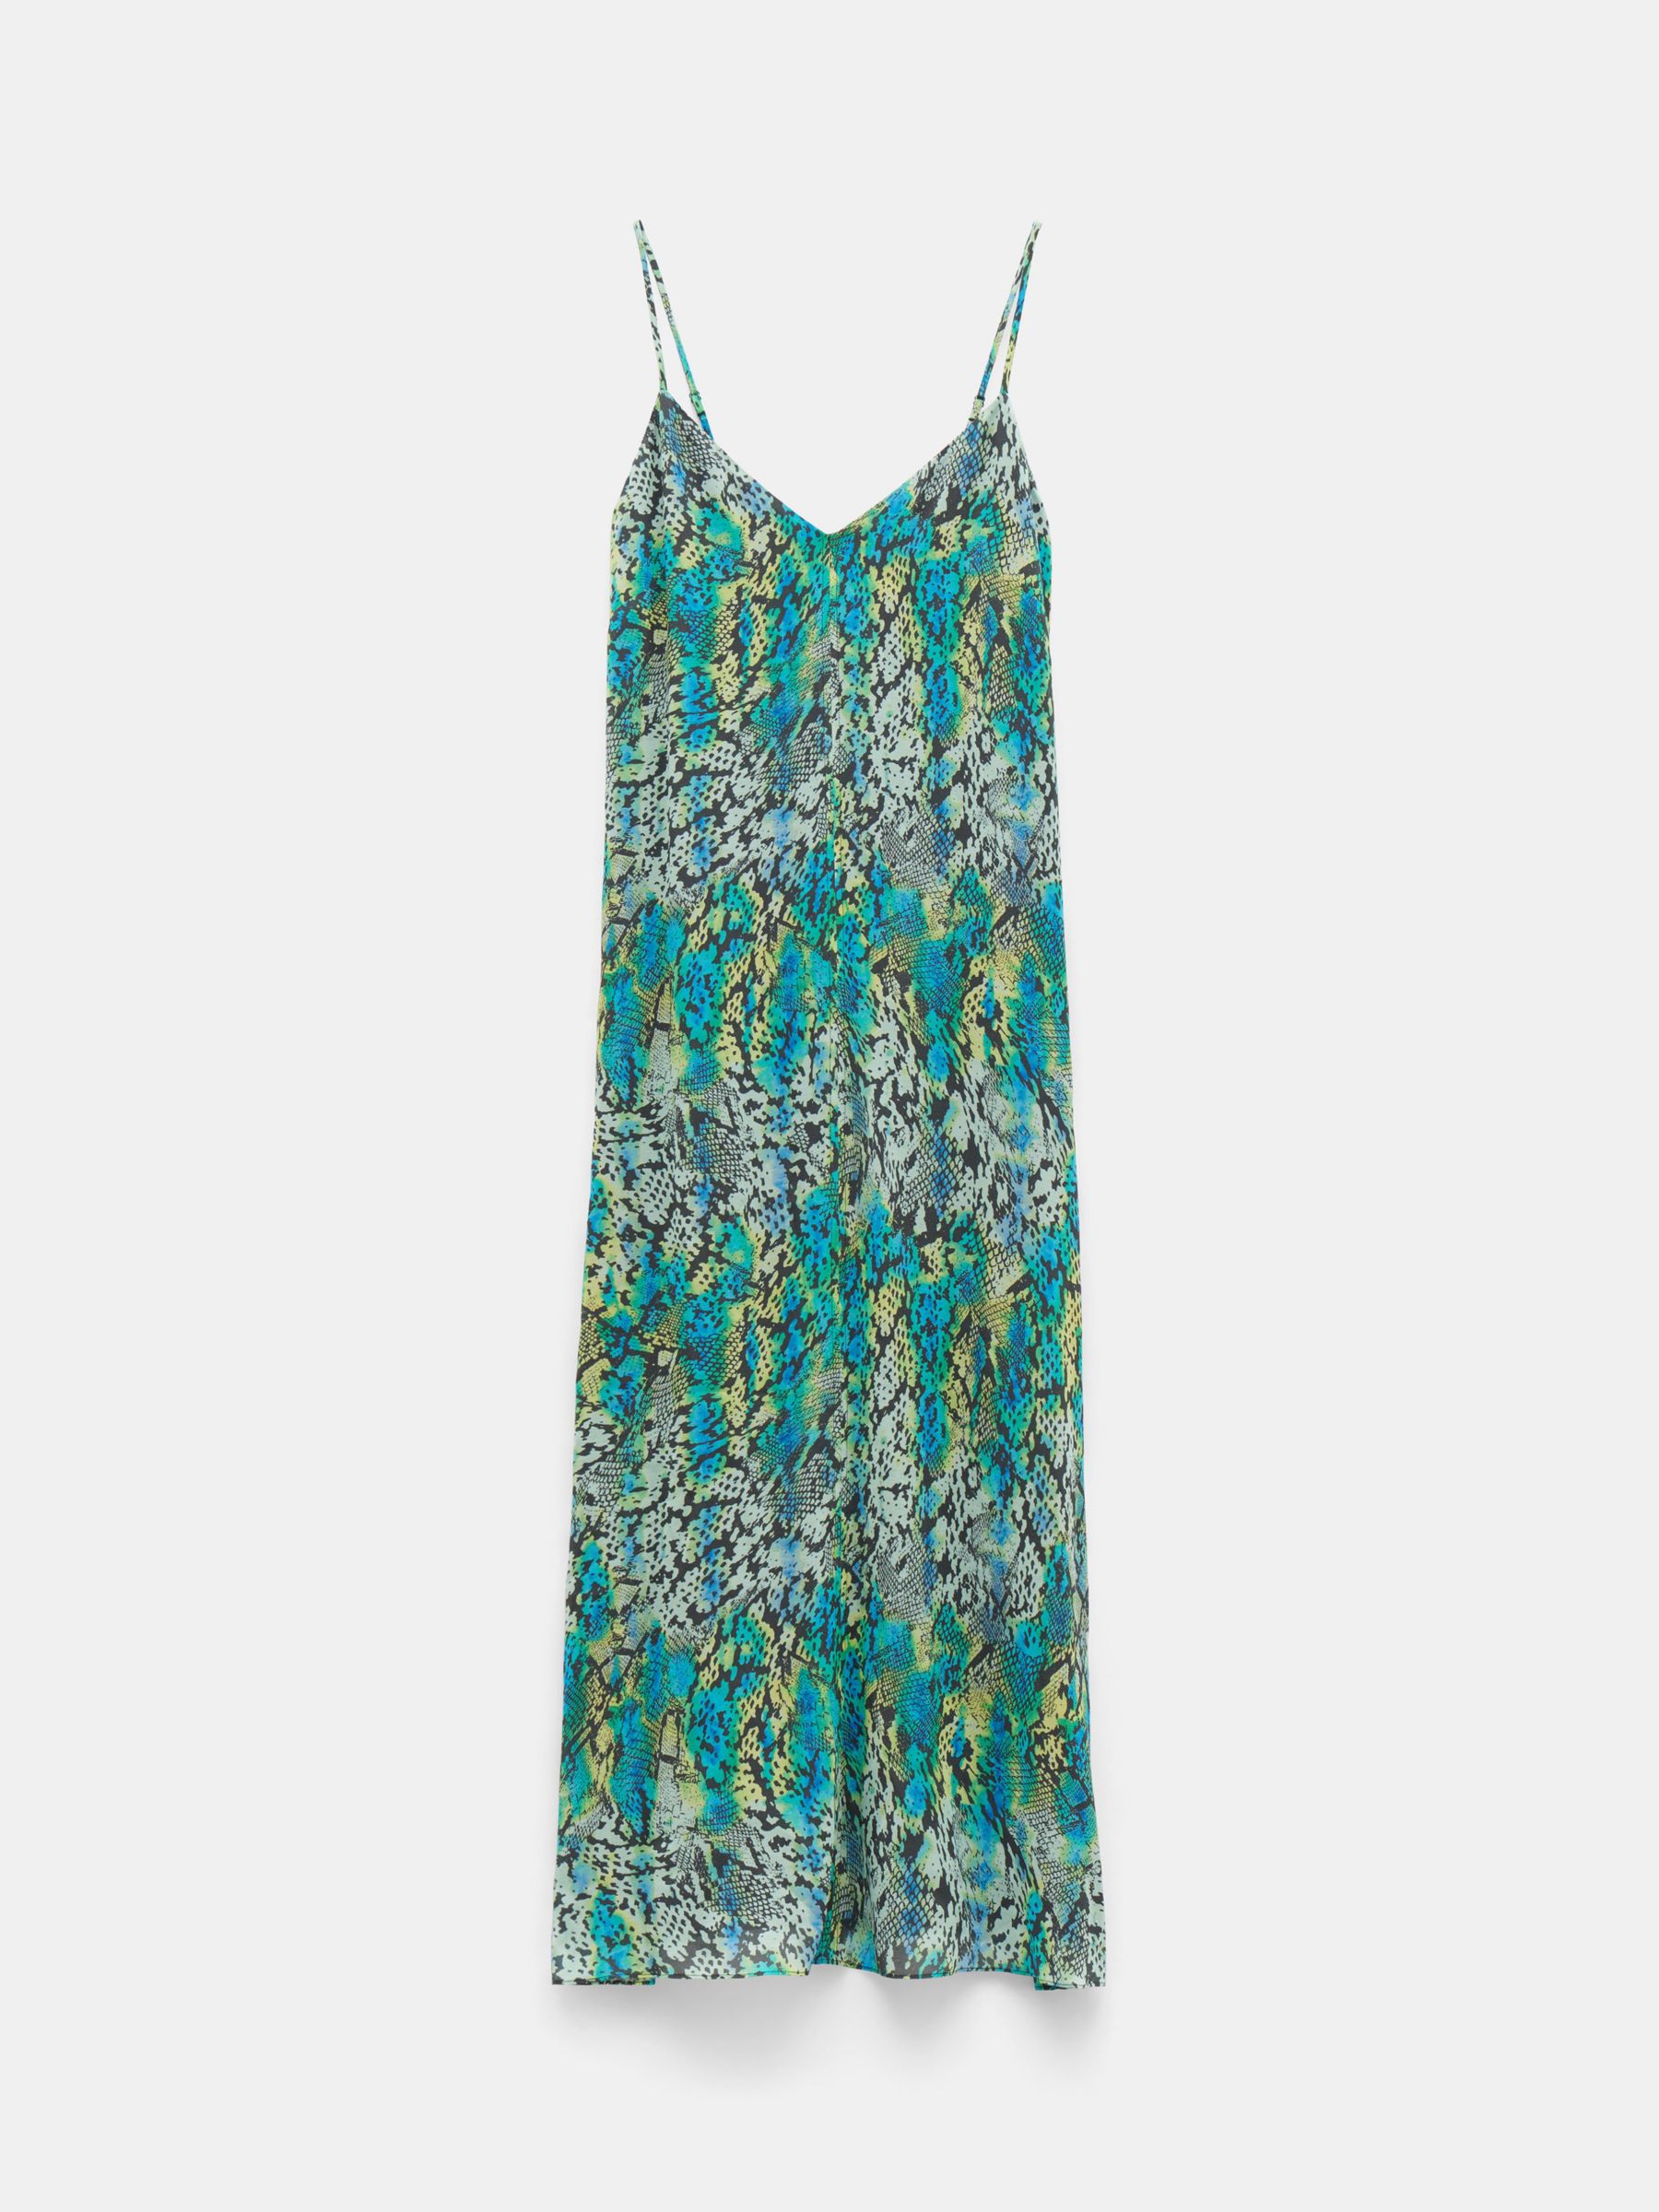 HUSH Sydney Tie Dye Snake Print Maxi Slip Dress, Multi, 18